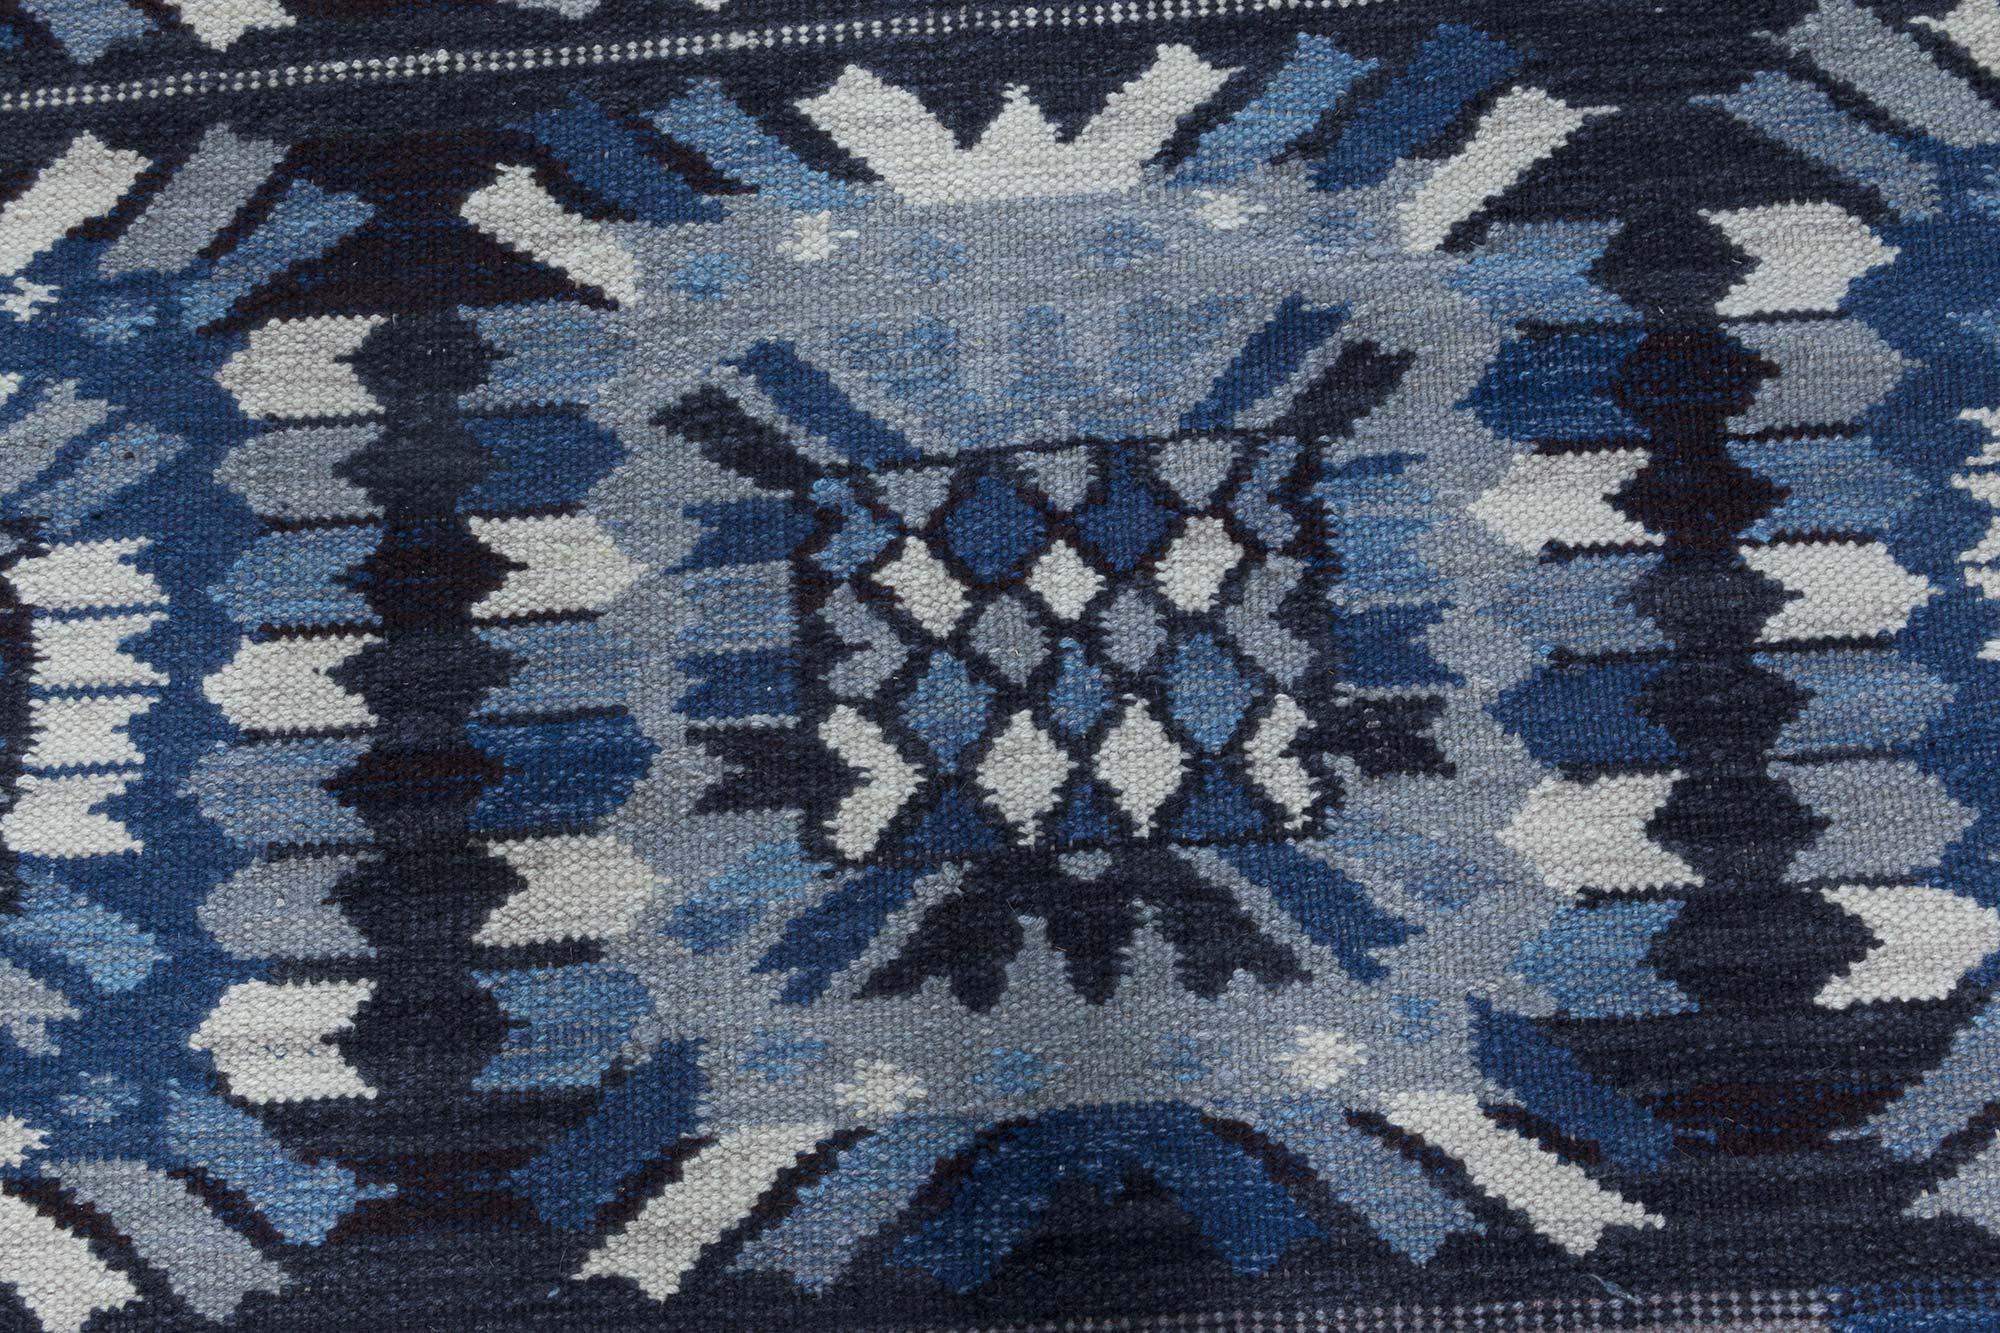 Contemporary Swedish Inspired Flat-Weave rug by Doris Leslie Blau
Size: 12'6